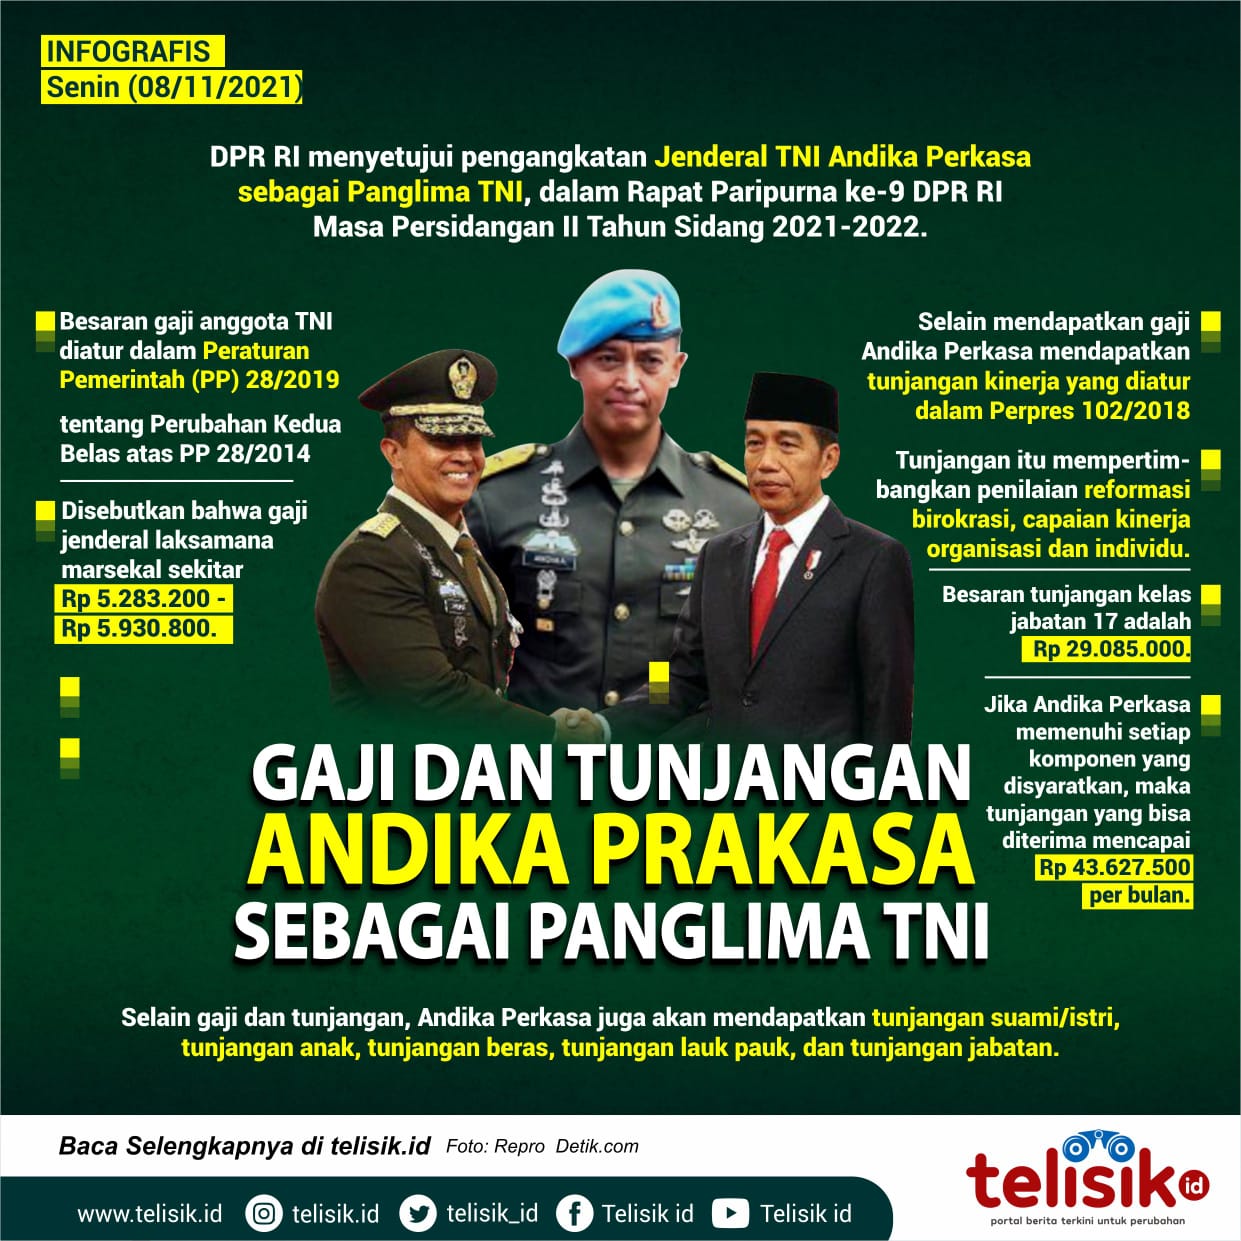 Infografis: Gaji dan Tunjangan Andika Prakasa Sebagai Panglima TNI